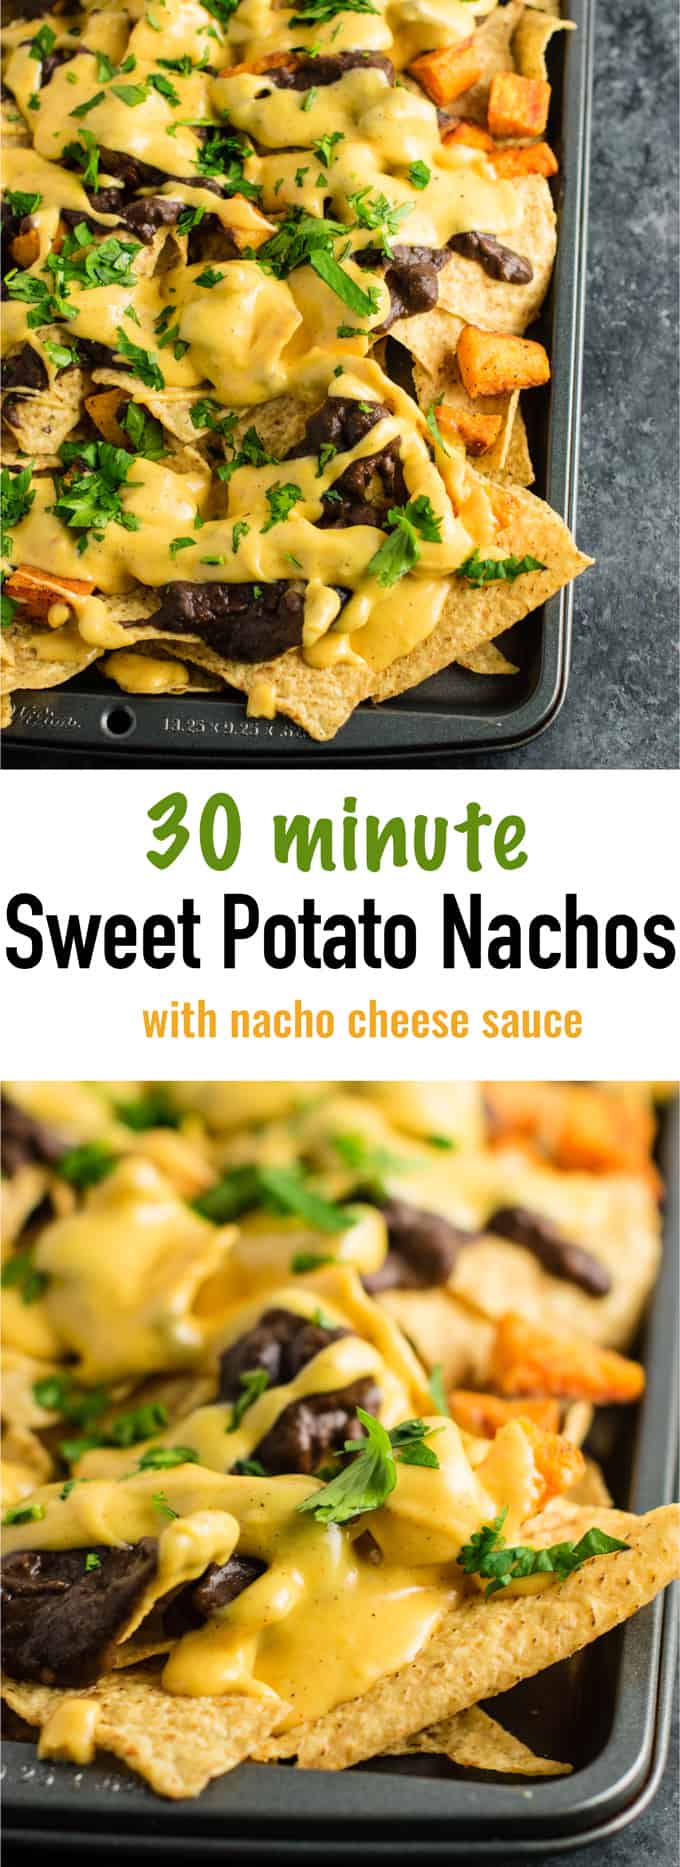 30 minute sweet potato refried bean nachos with homemade nacho cheese sauce. This is our go to Mexican meal! #30minute #vegetarian #sweetpotatonachos #sweetpotato #glutenfree #nachocheesesauce